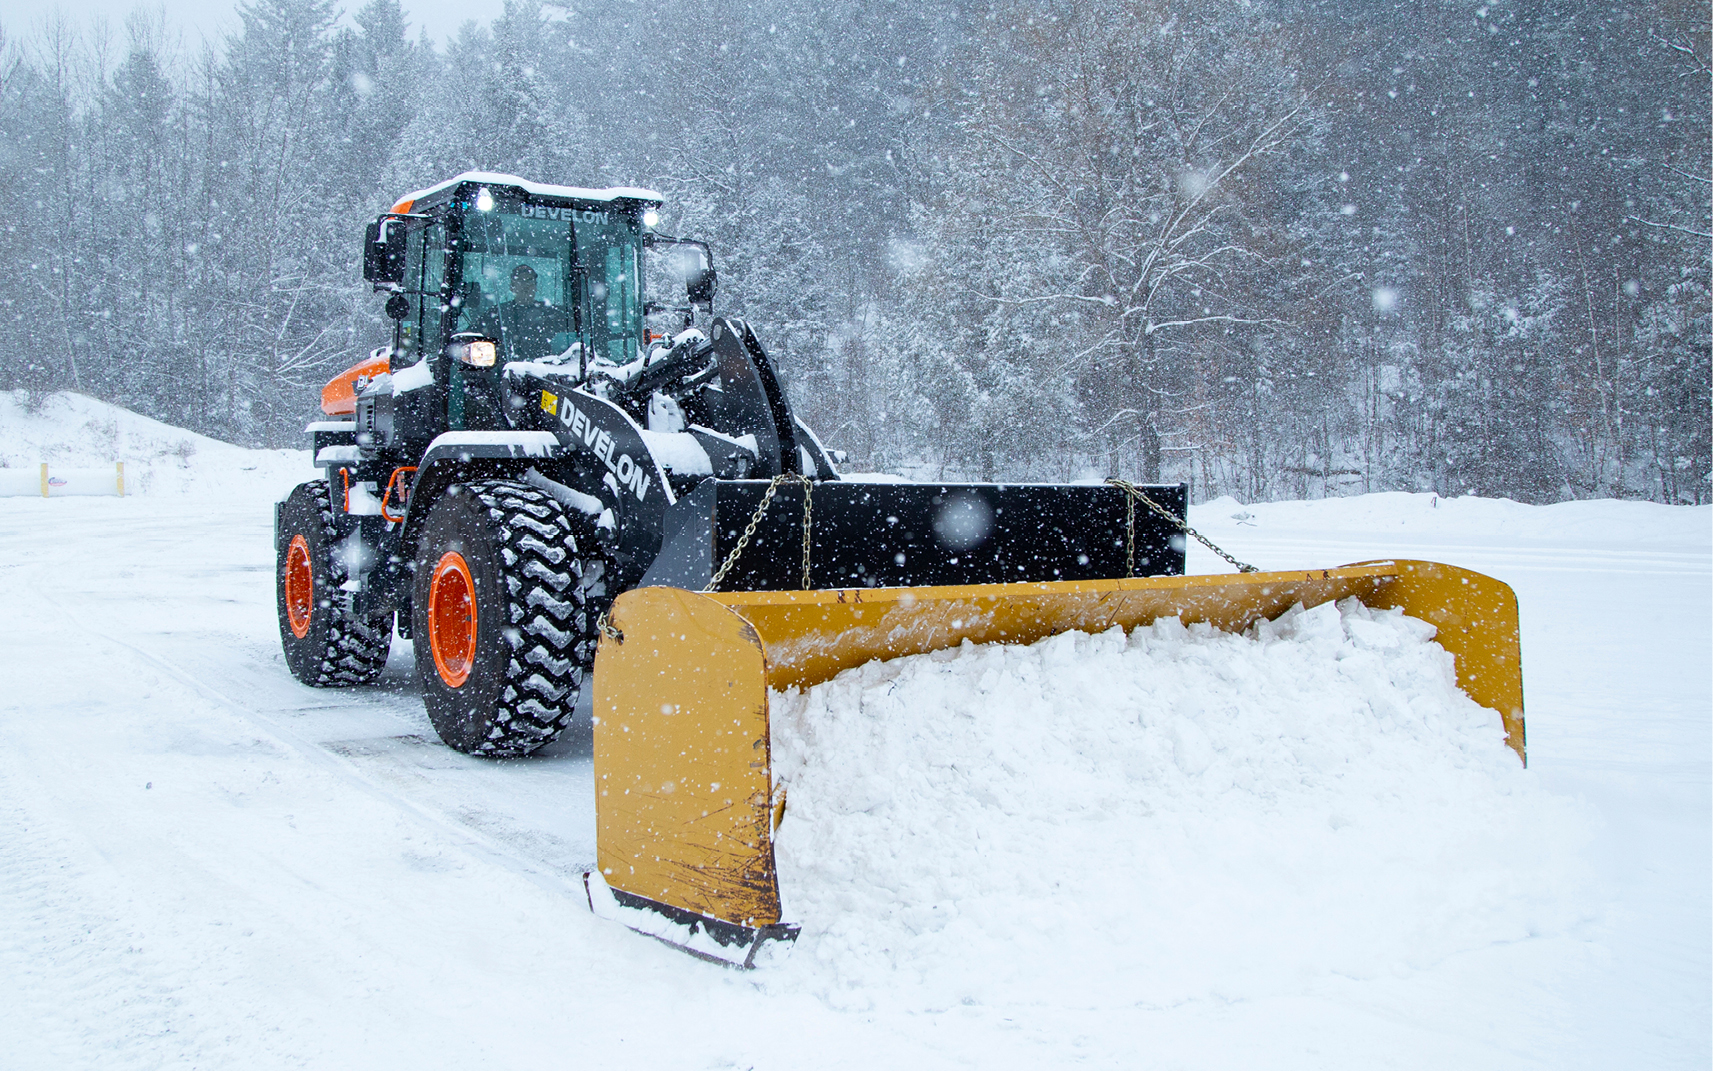 A DEVELON wheel loader pushing snow during winter.